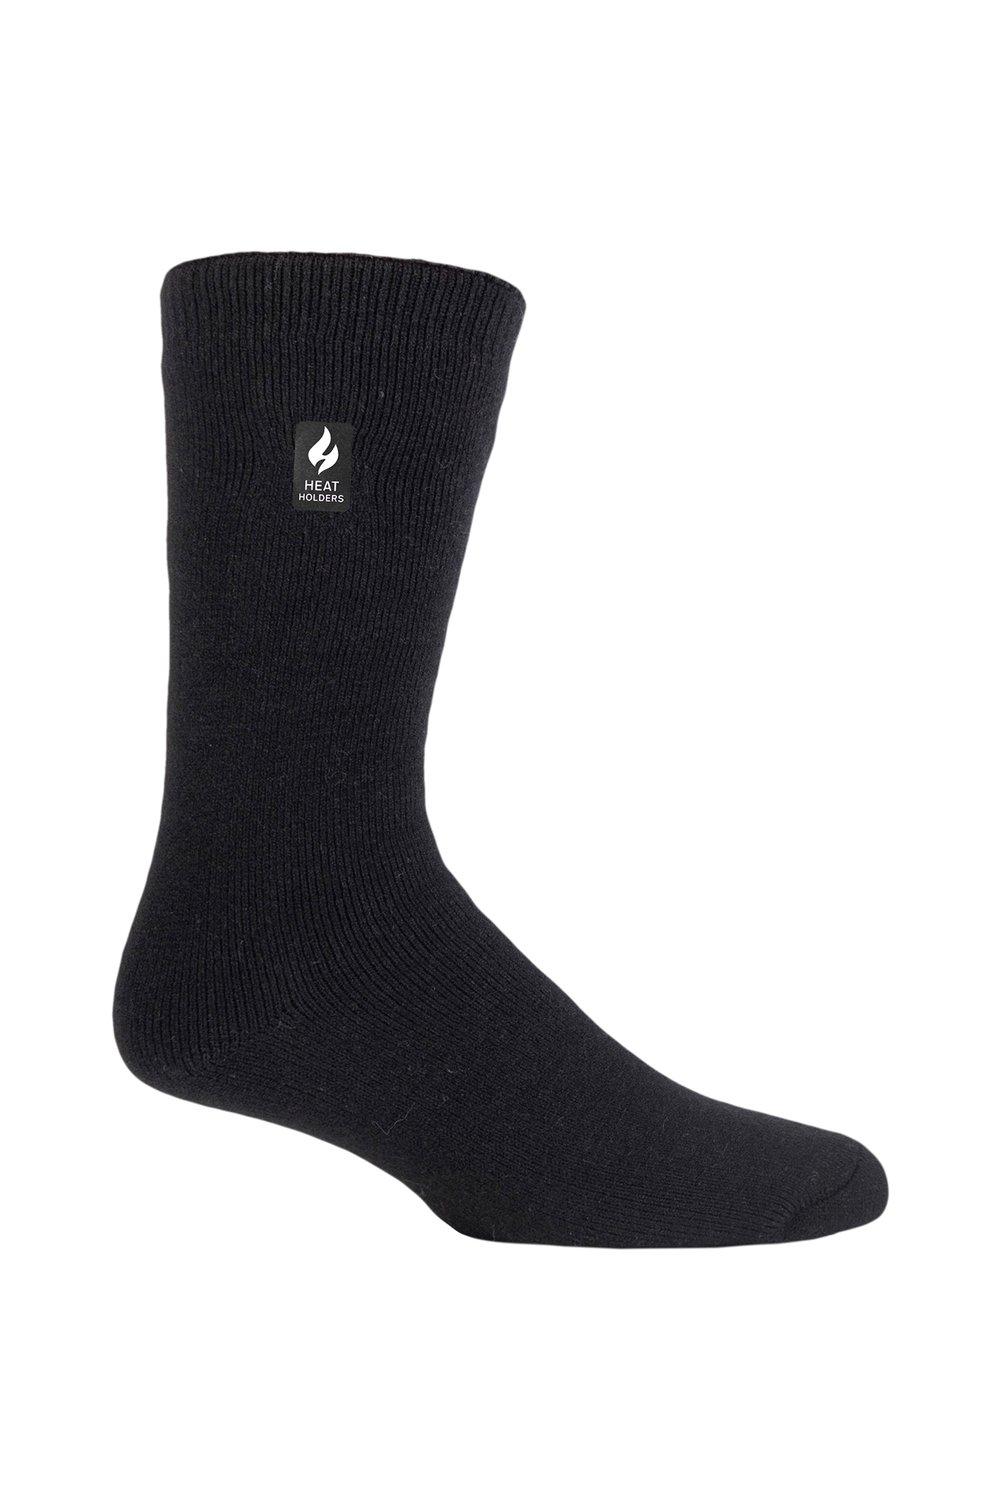 1 пара носков 1.6 TOG Lite SOCKSHOP Heat Holders, черный 1 pair mens winter wool socks thermal warm socks soft socks hiking socks